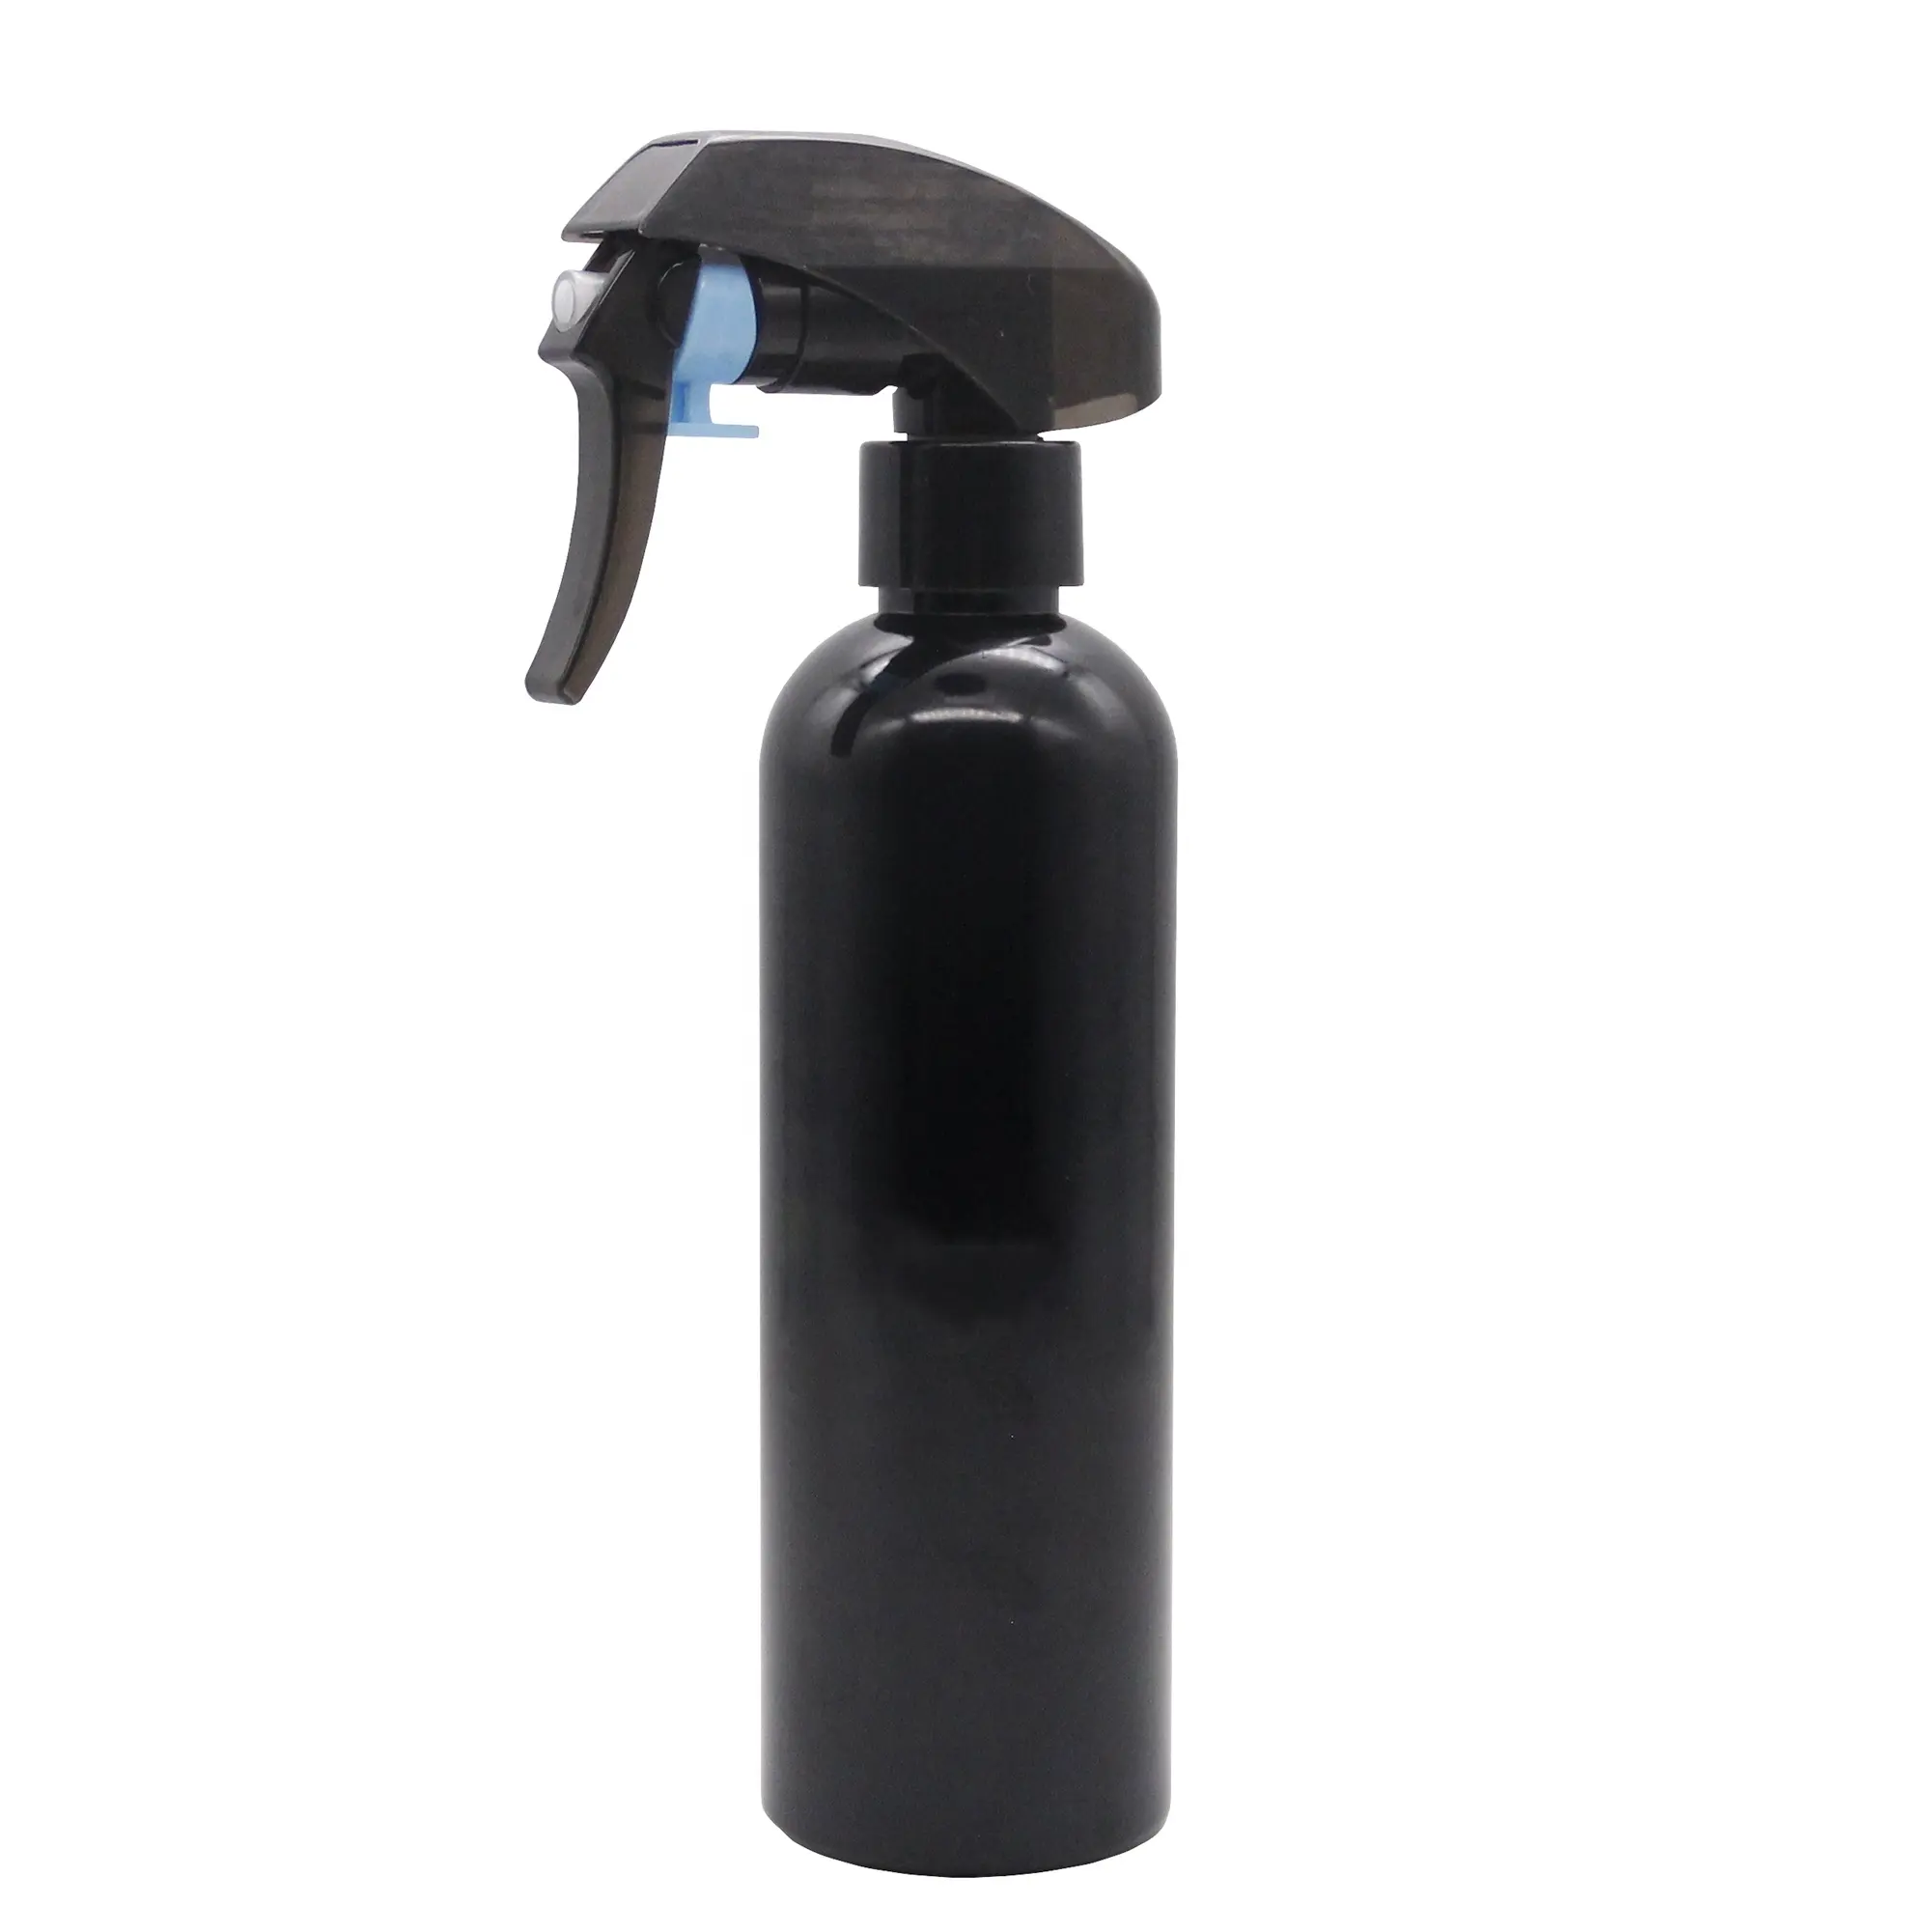 Botol semprot mengkilap HITAM PET plastik silinder 8oz 250ml dengan penyemprot pelatuk Kao hitam